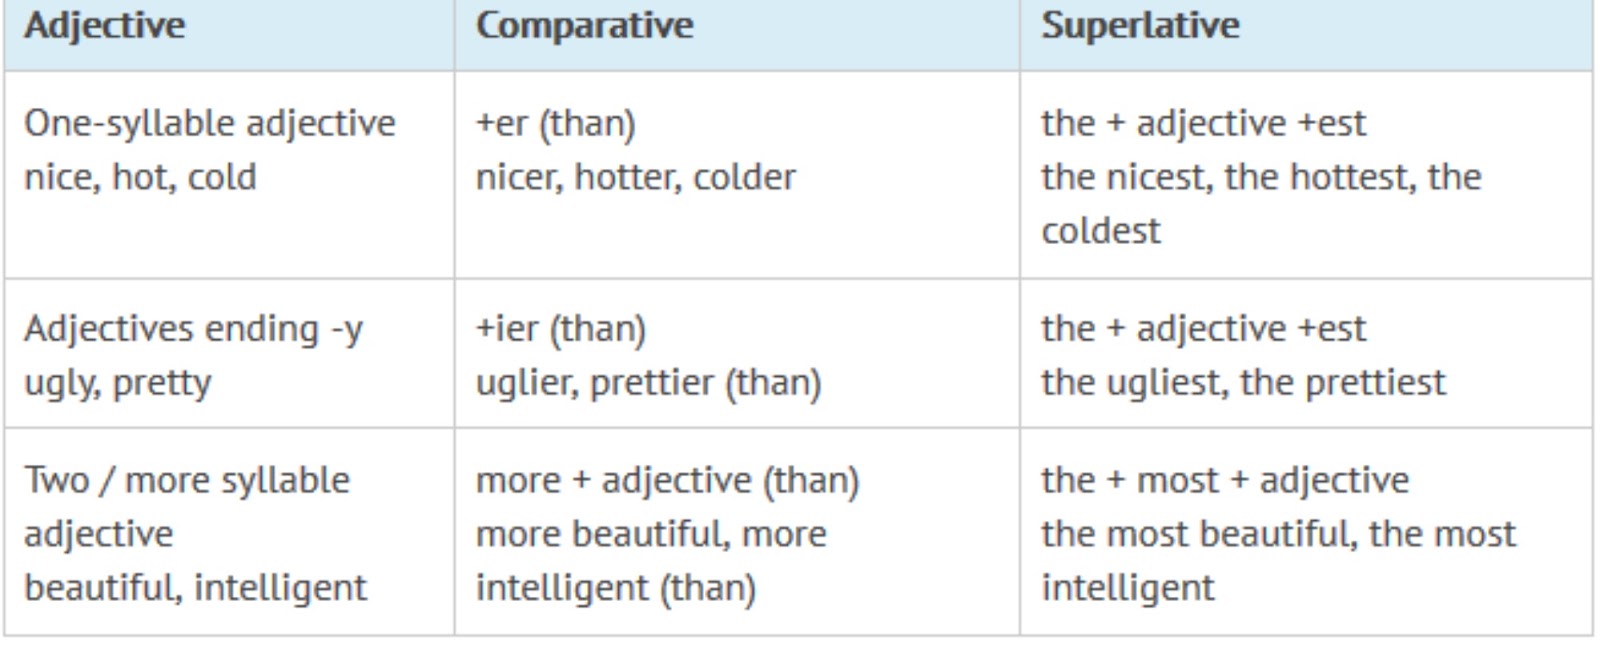 Bored comparative. Comparatives and Superlatives. Comparative and Superlative adjectives исключения. Грамматика Comparatives. Comparatives and Superlatives исключения.